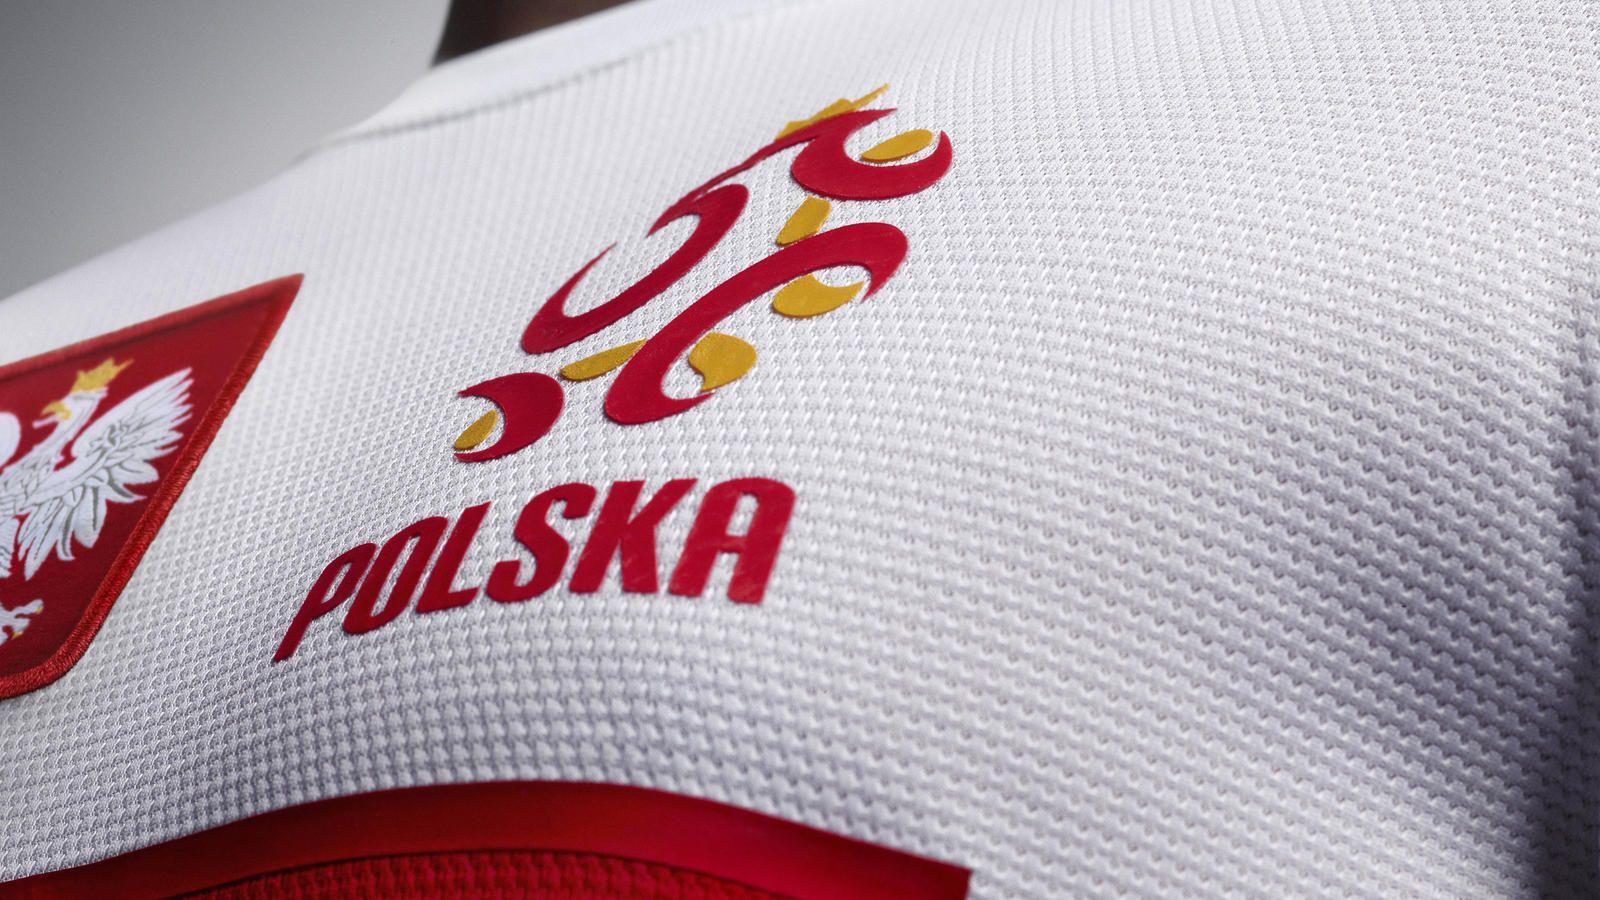 Poland 2012 National Team Home Kit